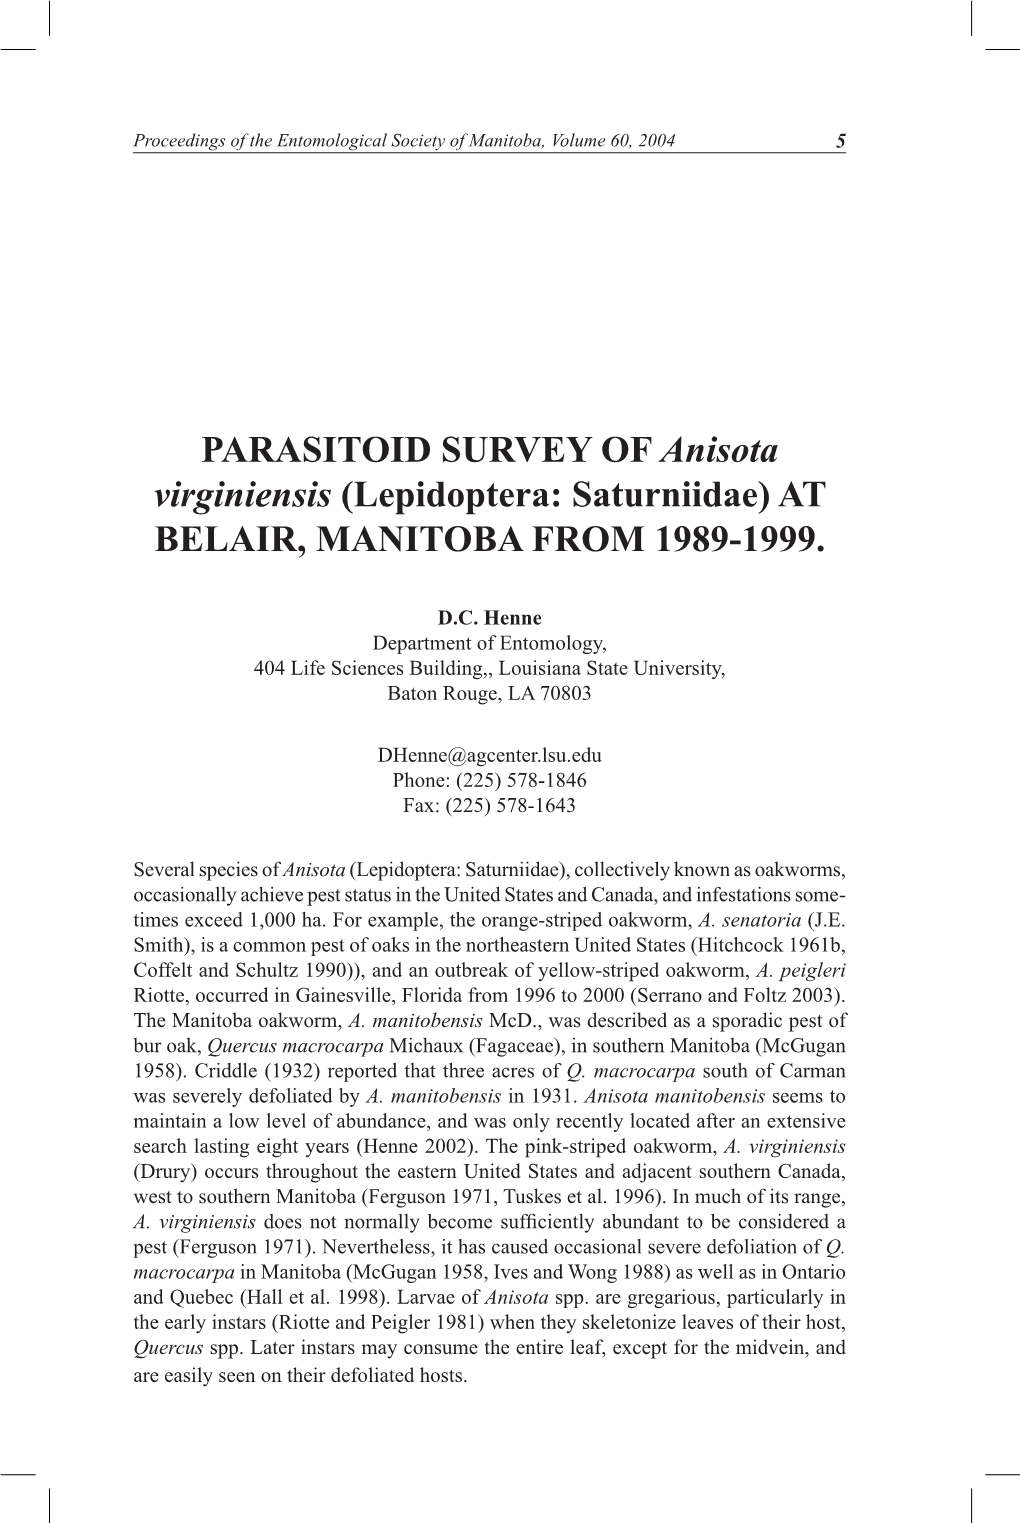 Henne, D.C. 2004. Parasitoid Survey of Anisota